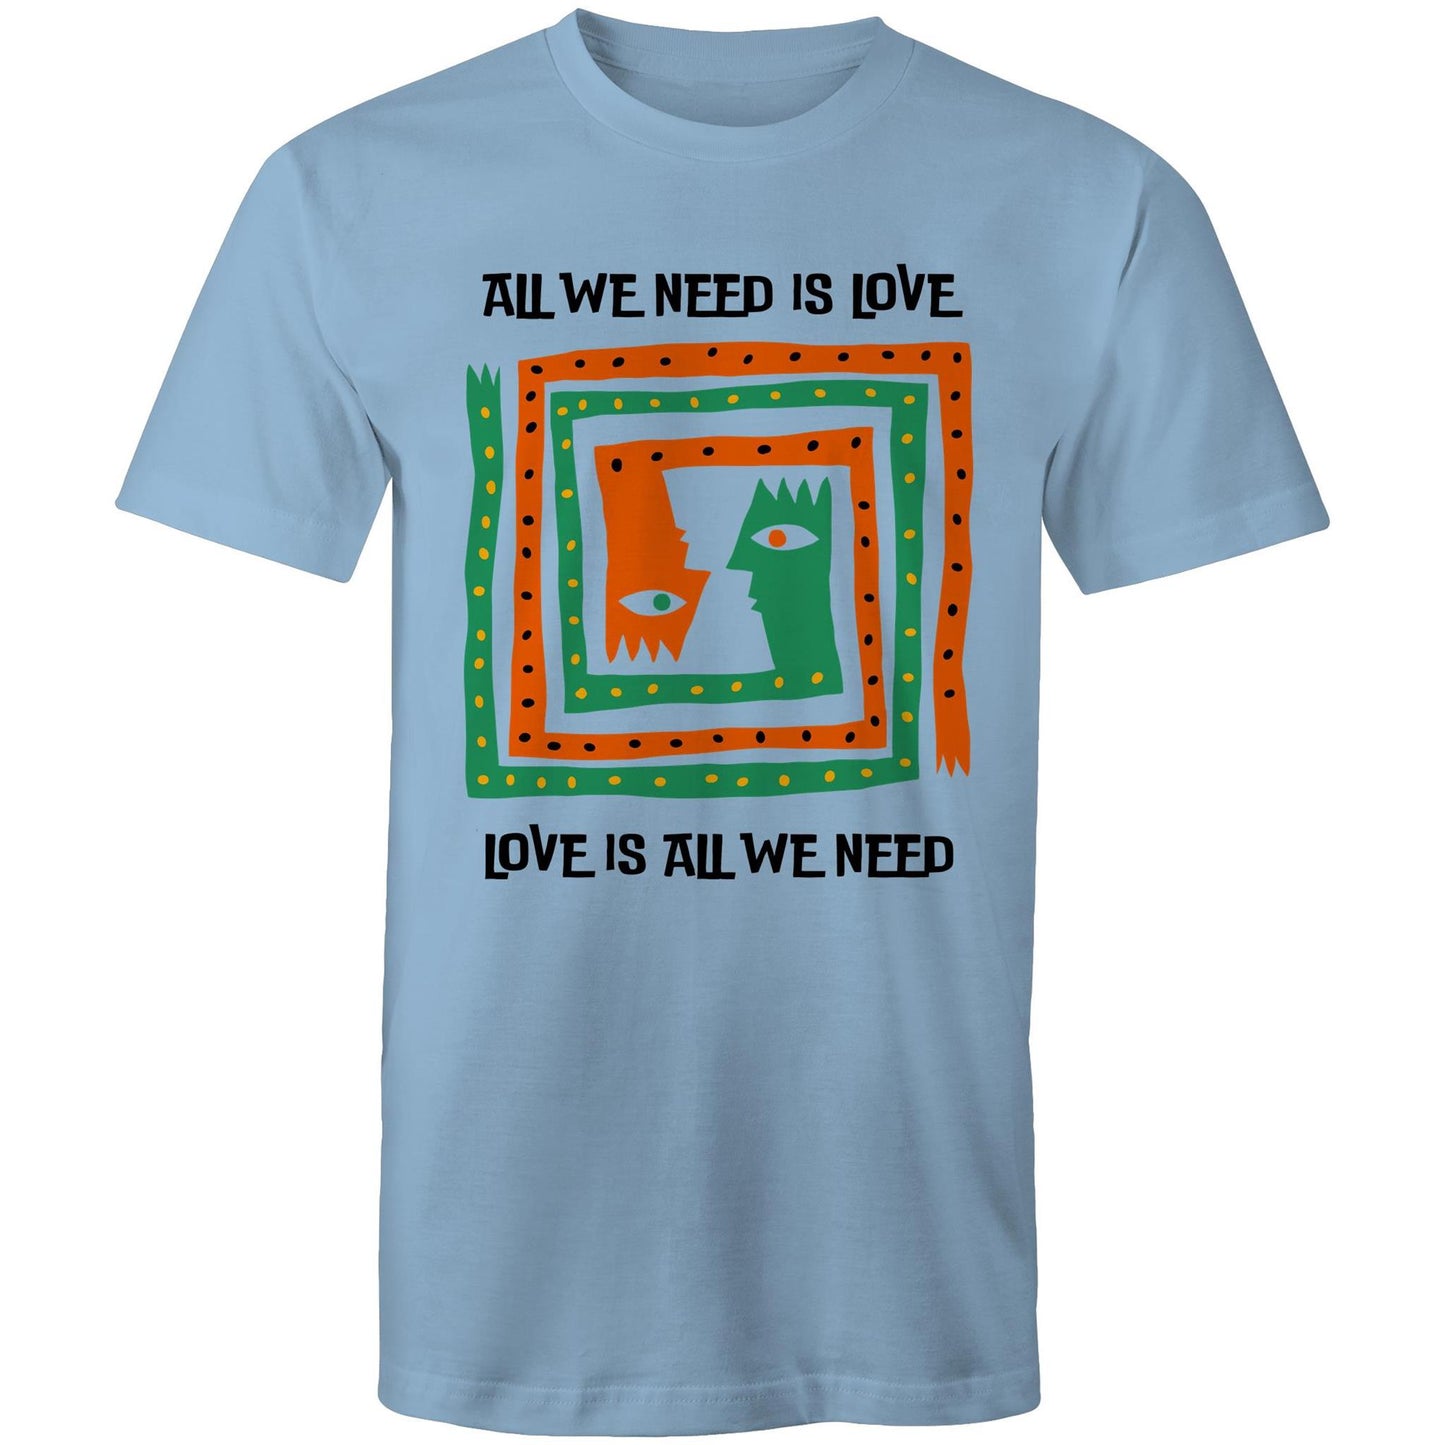 All We Need Is Love - Mens T-Shirt Carolina Blue Mens T-shirt